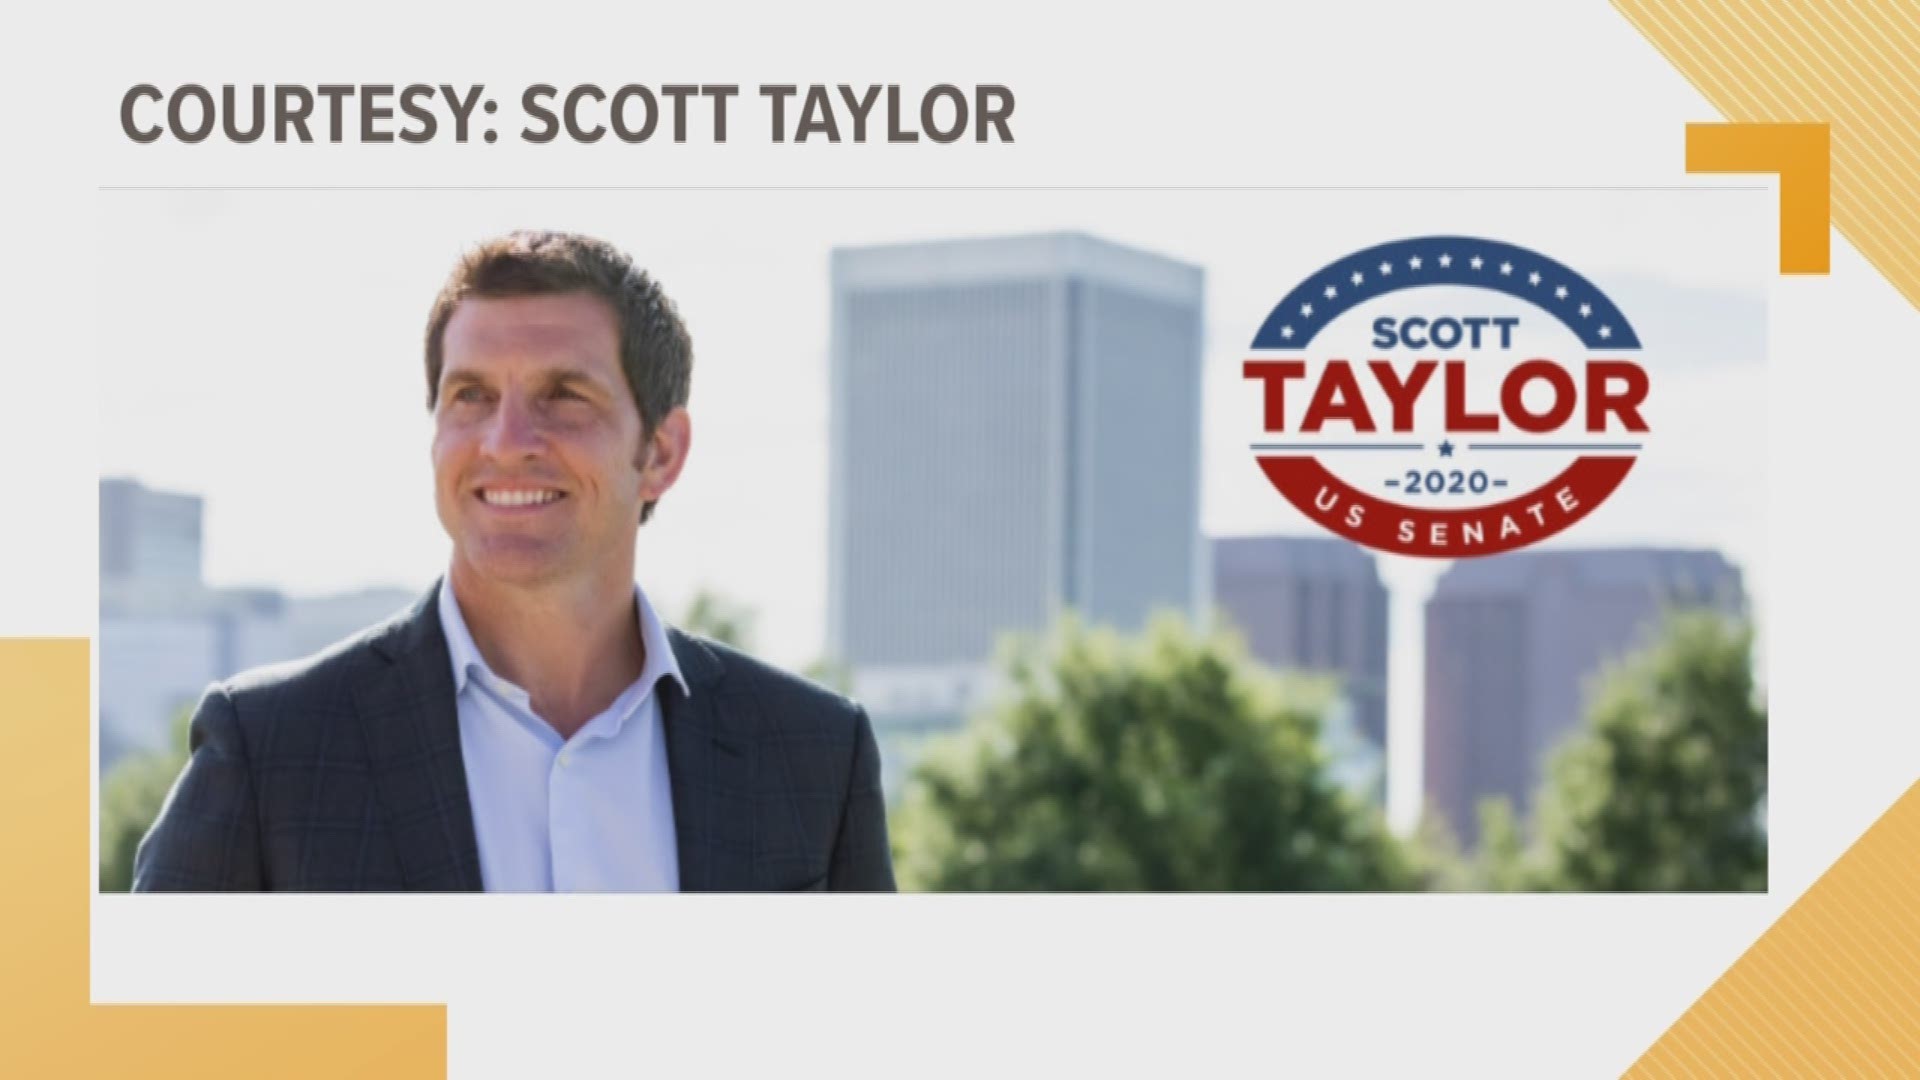 Republican former Rep. Scott Taylor says he's running for U.S. Senate in Virginia, hoping to unseat Democrat Mark Warner.